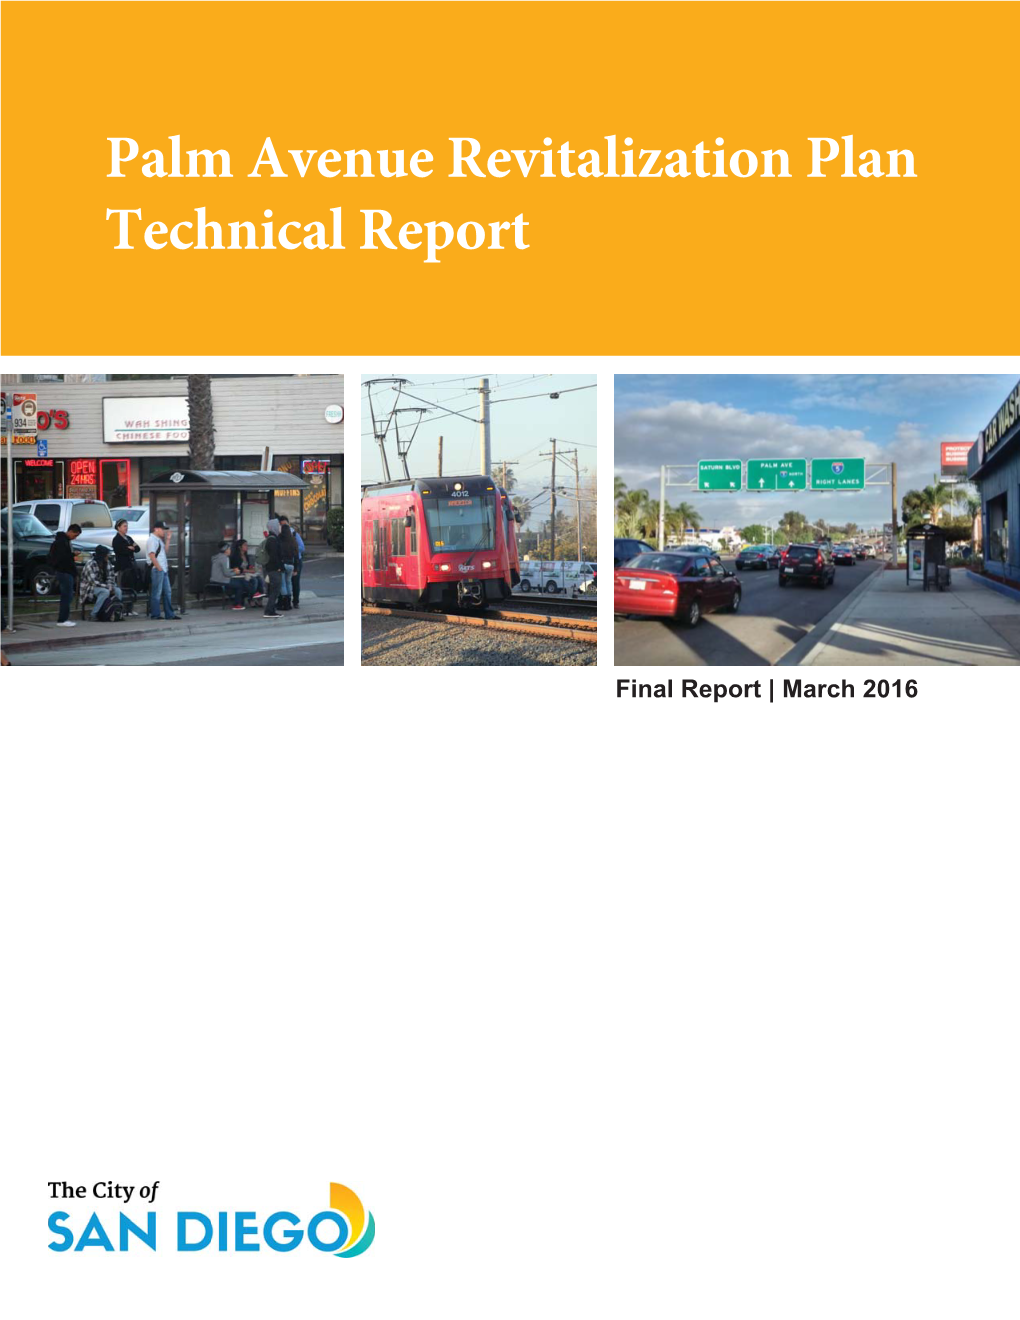 Palm Avenue Revitalization Plan Technical Report